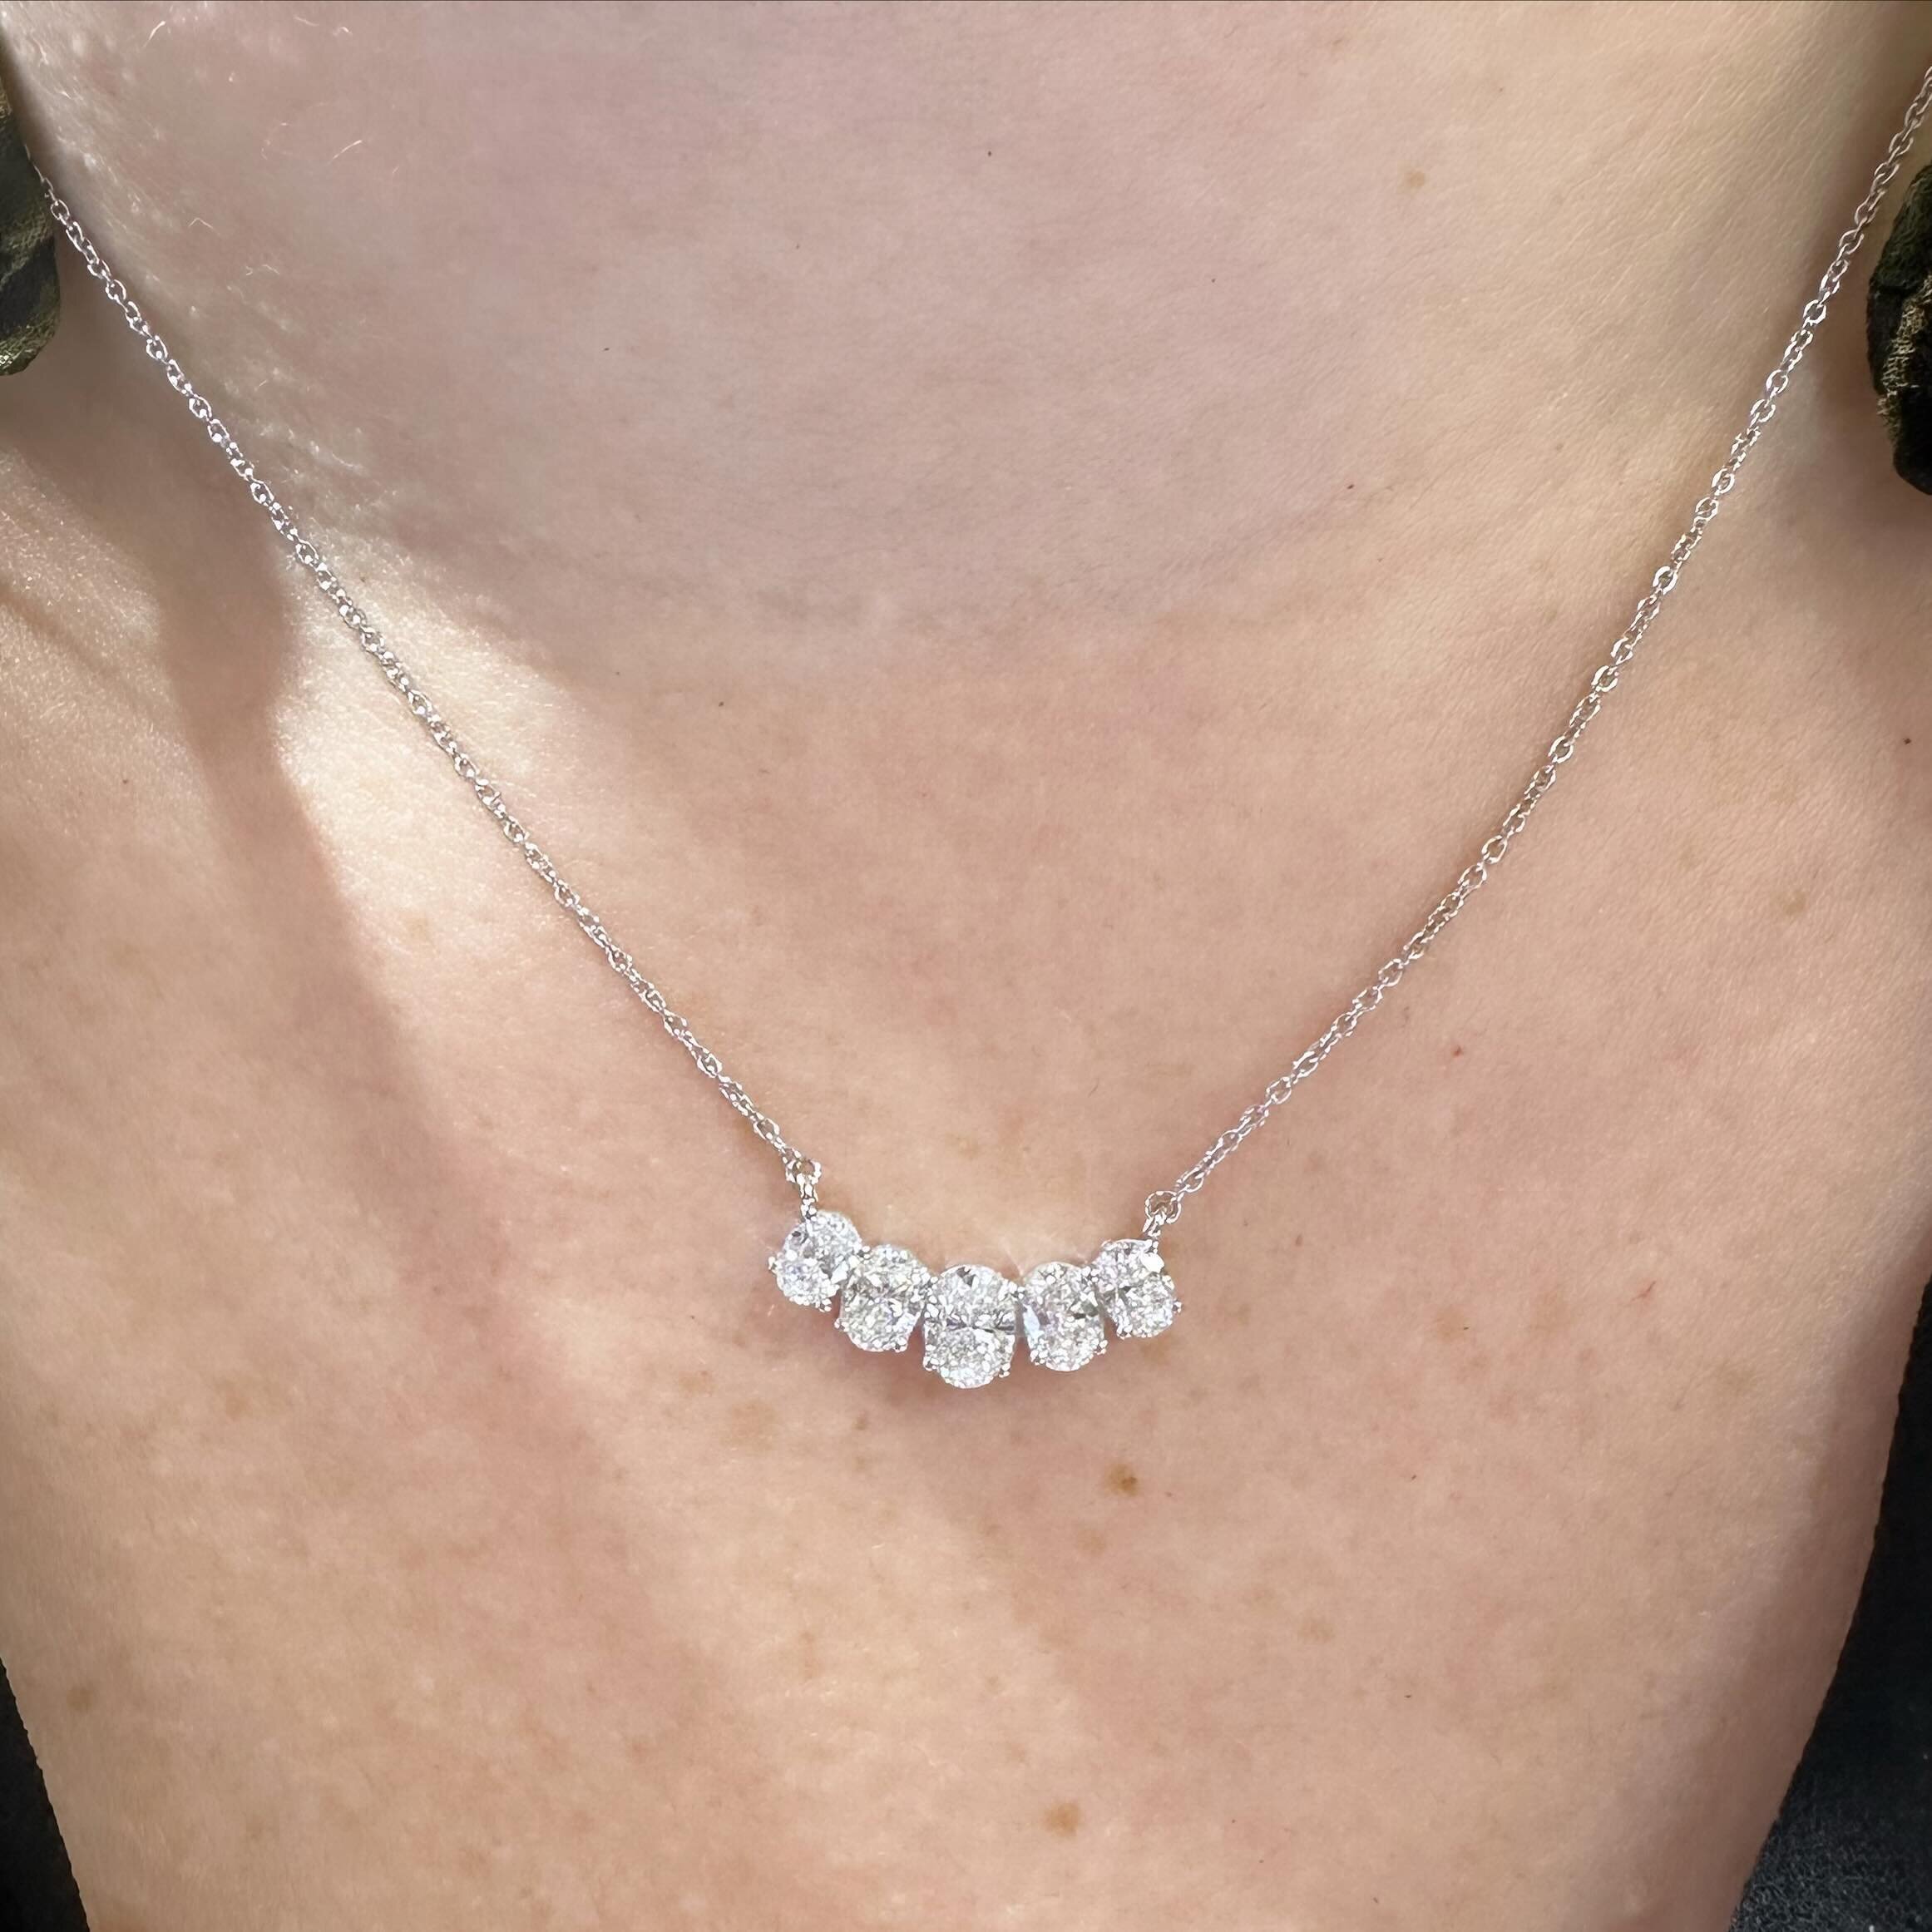 1 carat of stunning oval brilliant diamonds! 

#scfinejewelry #diamonds #fashion #ootd #instagram